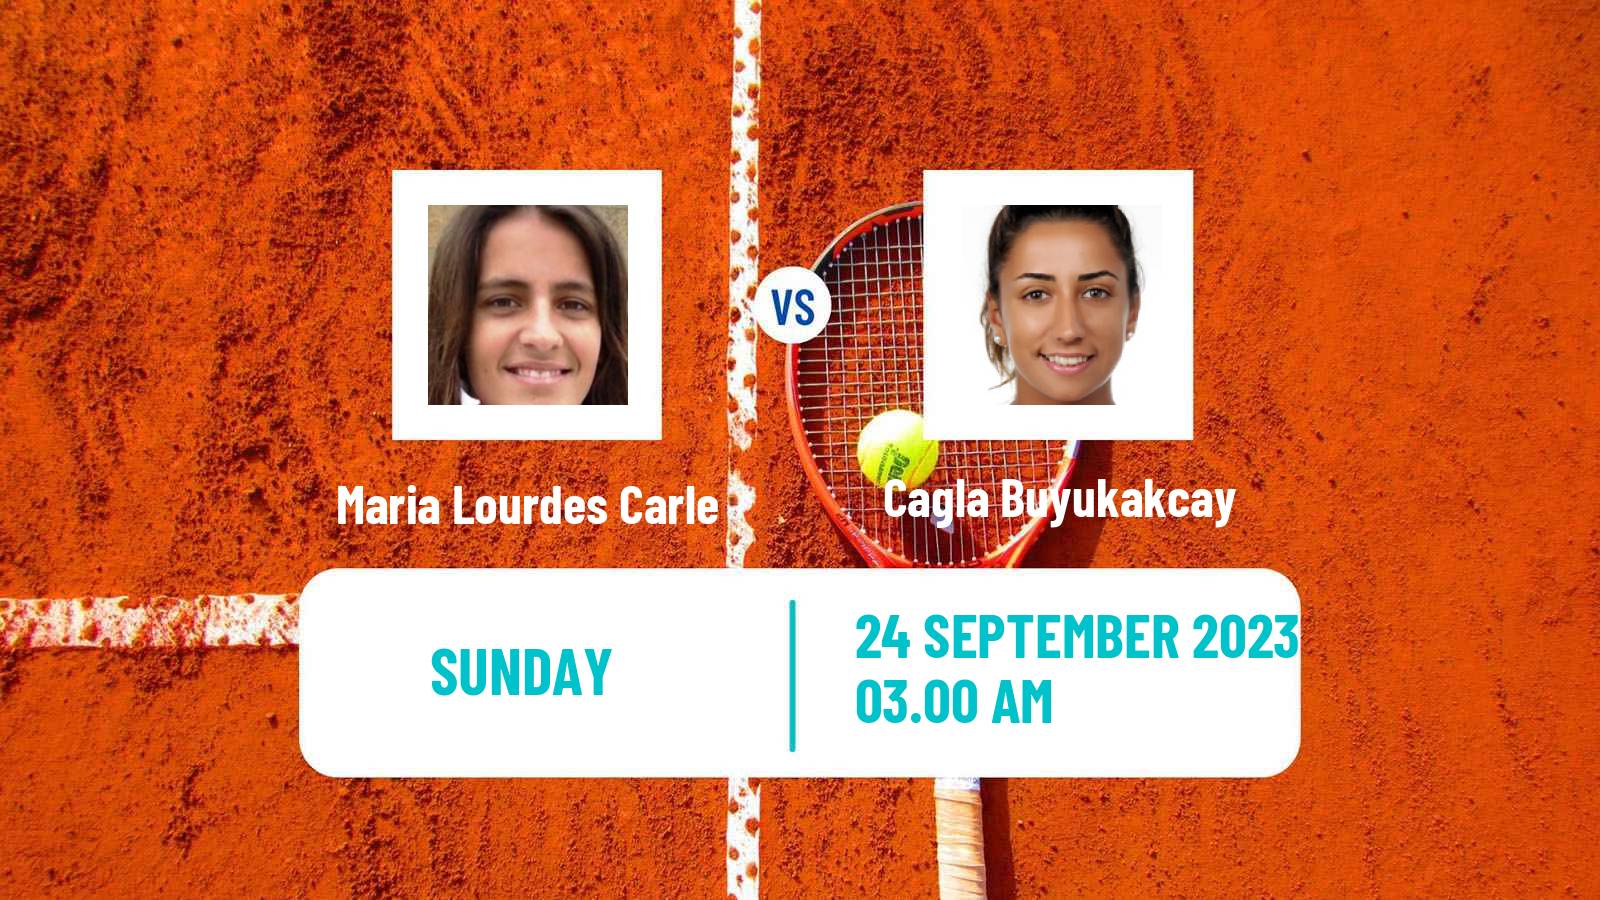 Tennis ITF W40 Pazardzhik Women Maria Lourdes Carle - Cagla Buyukakcay